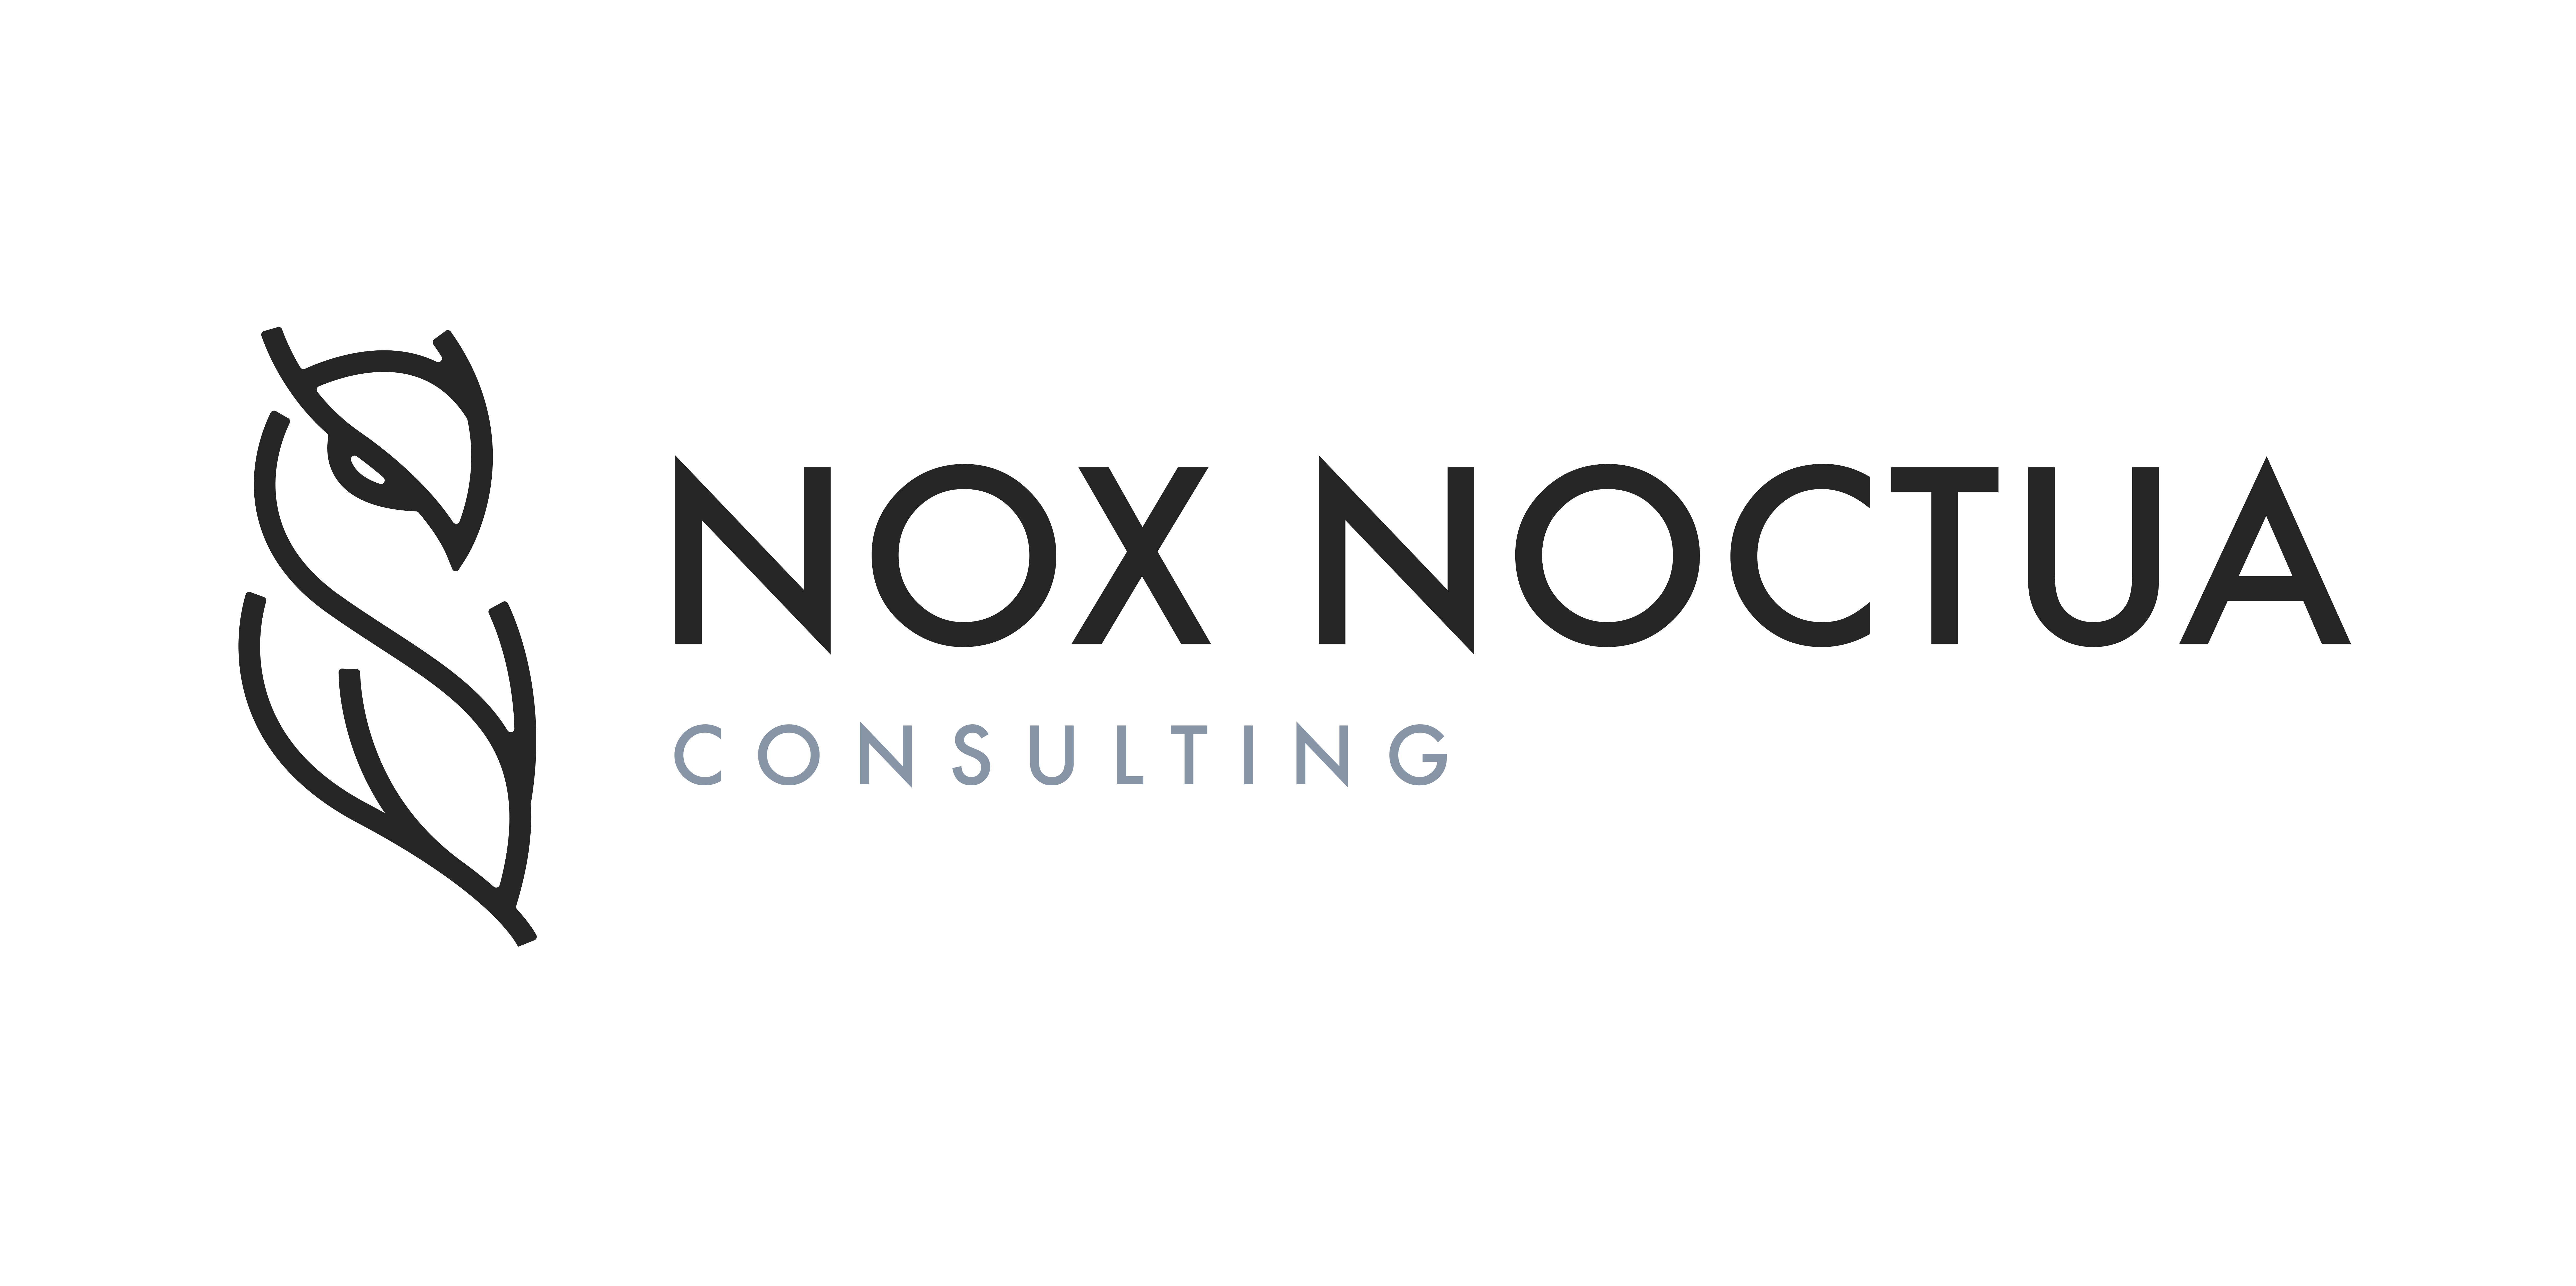 Nox Noctua Consulting